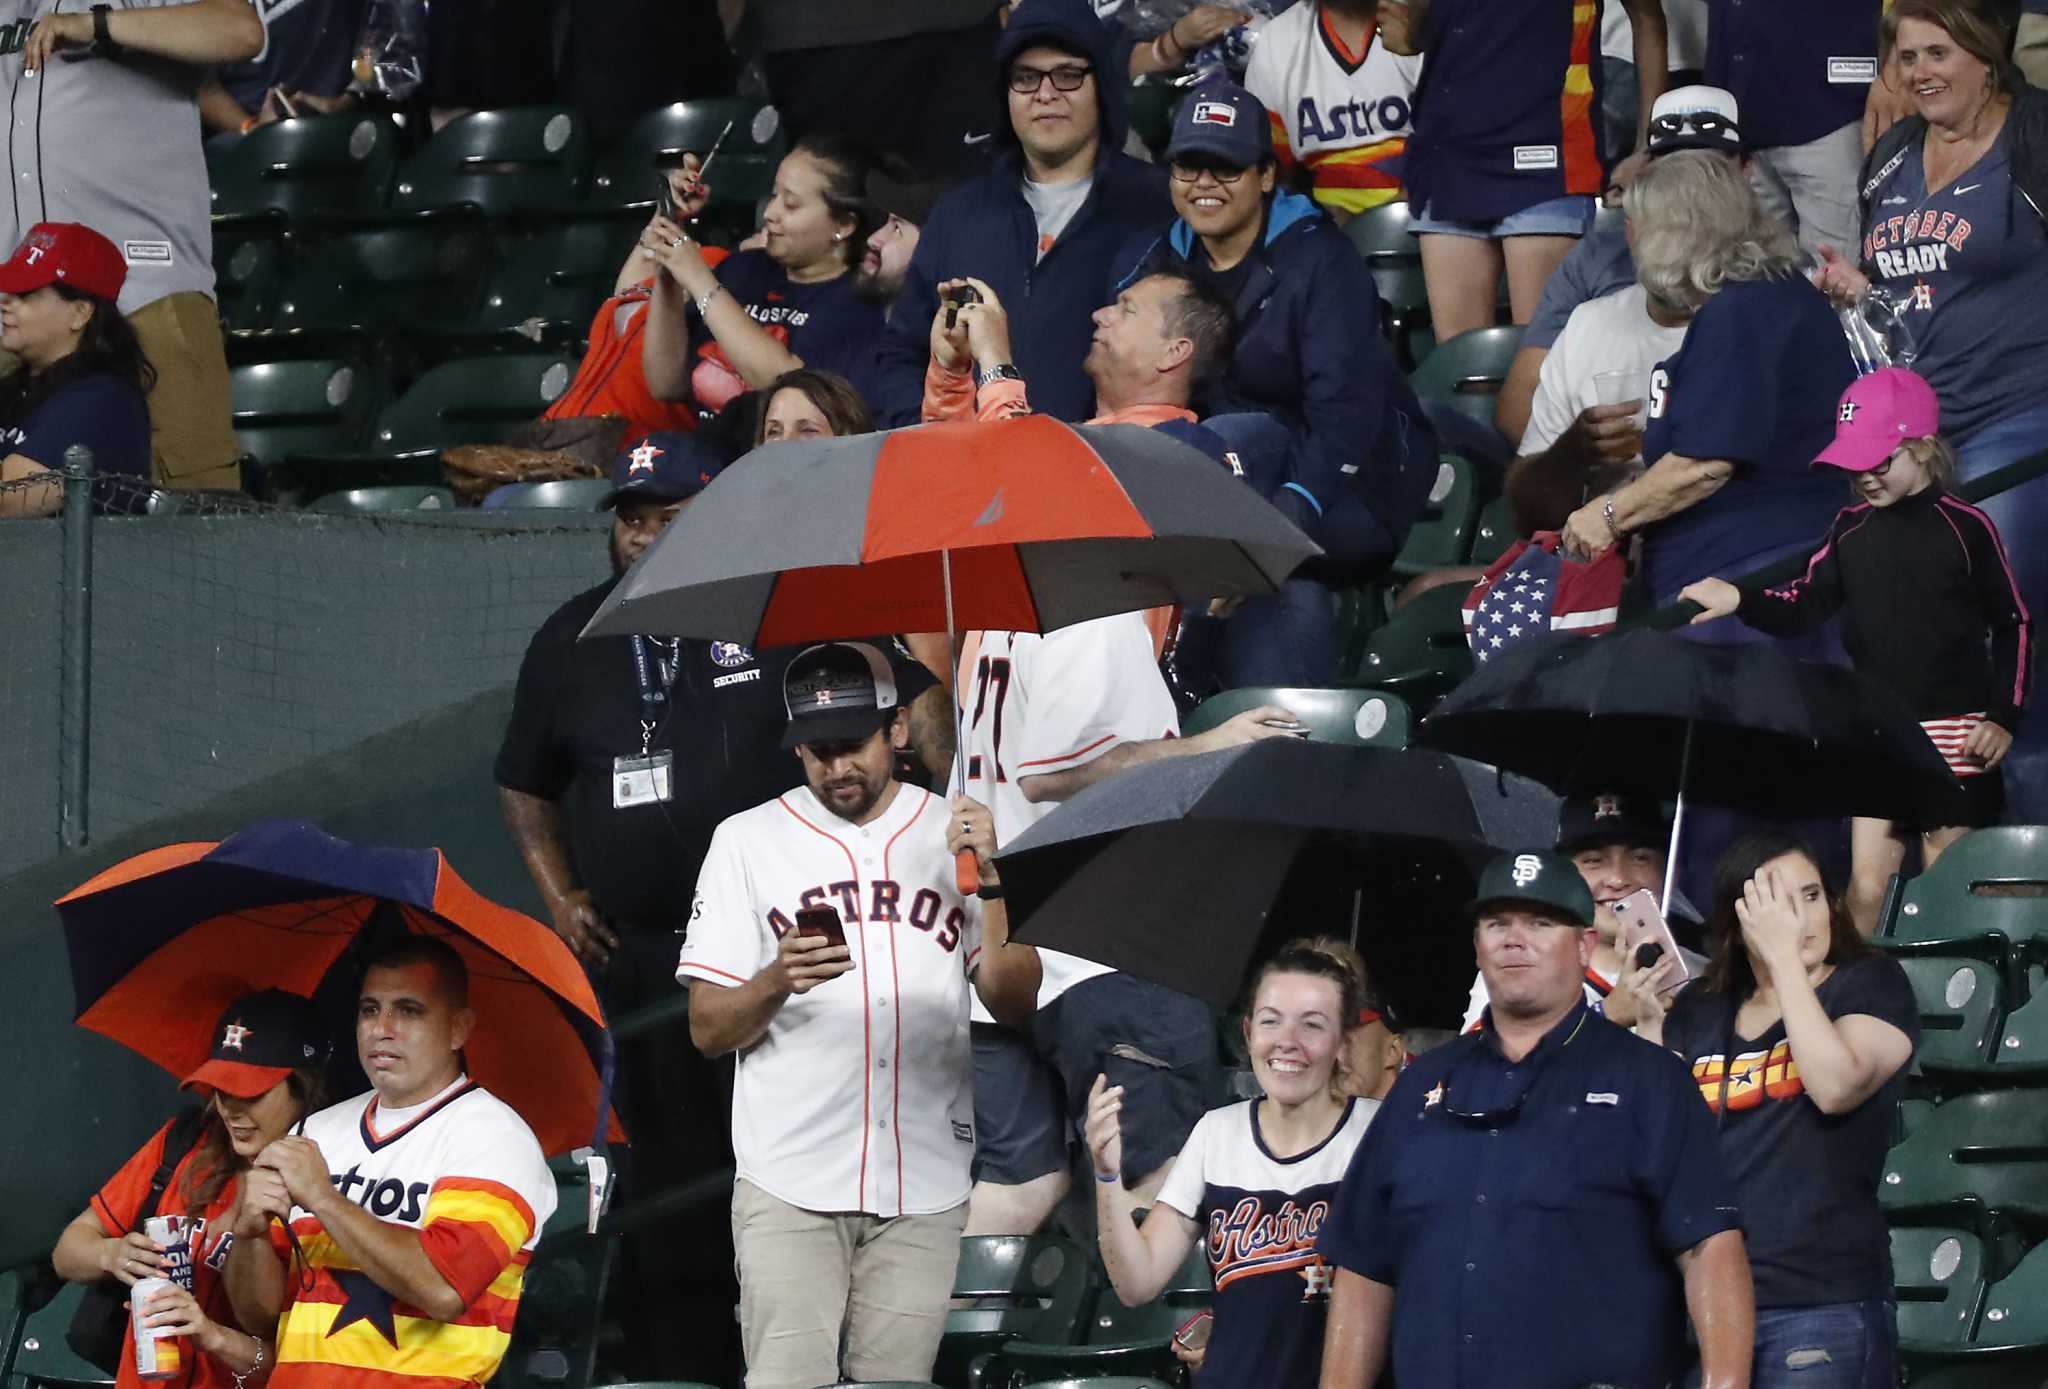 LOOK: Rain falls inside Astros' enclosed Minute Maid Park